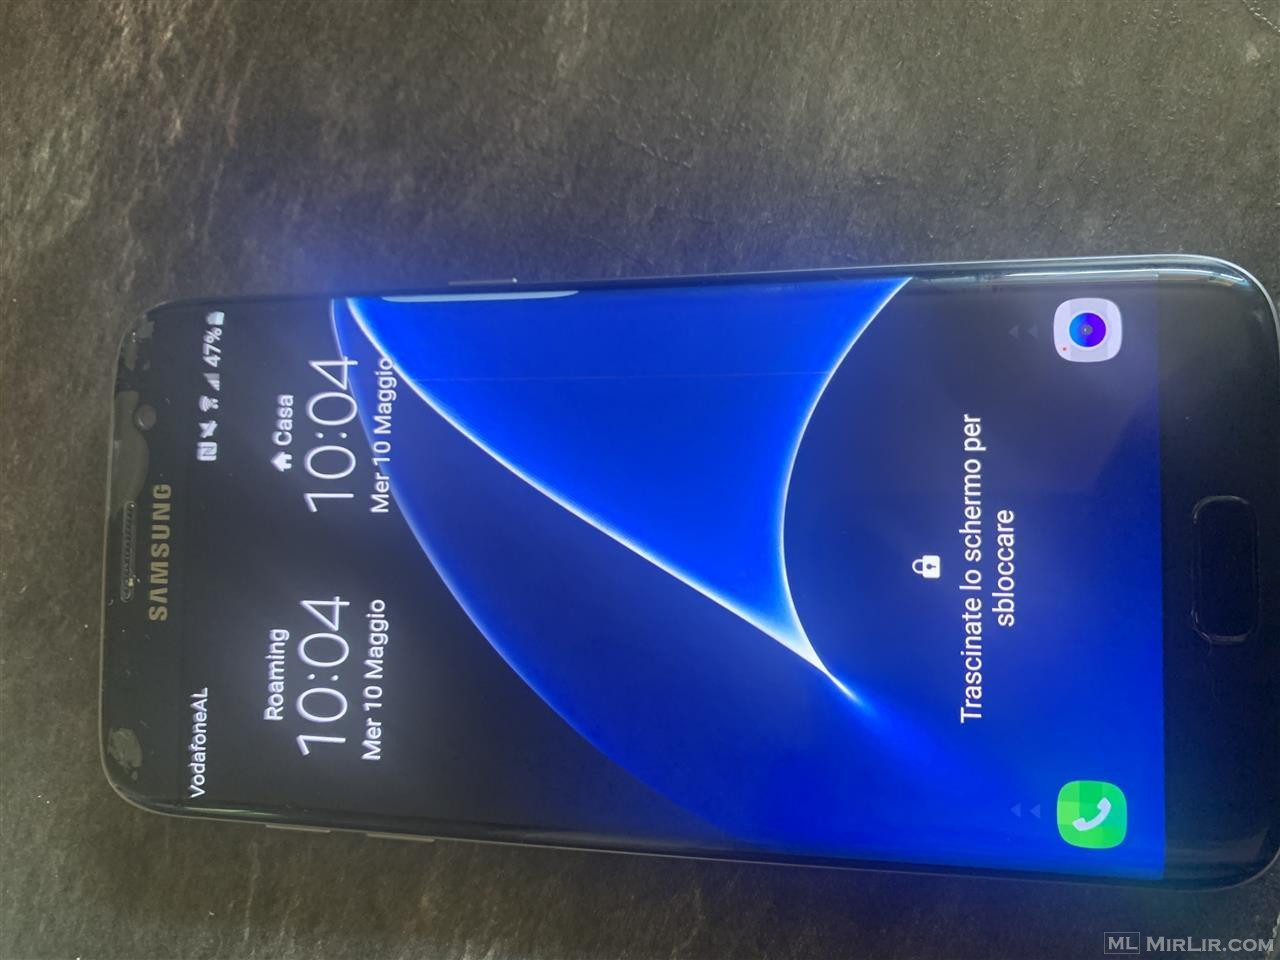 Samsung s7 edge